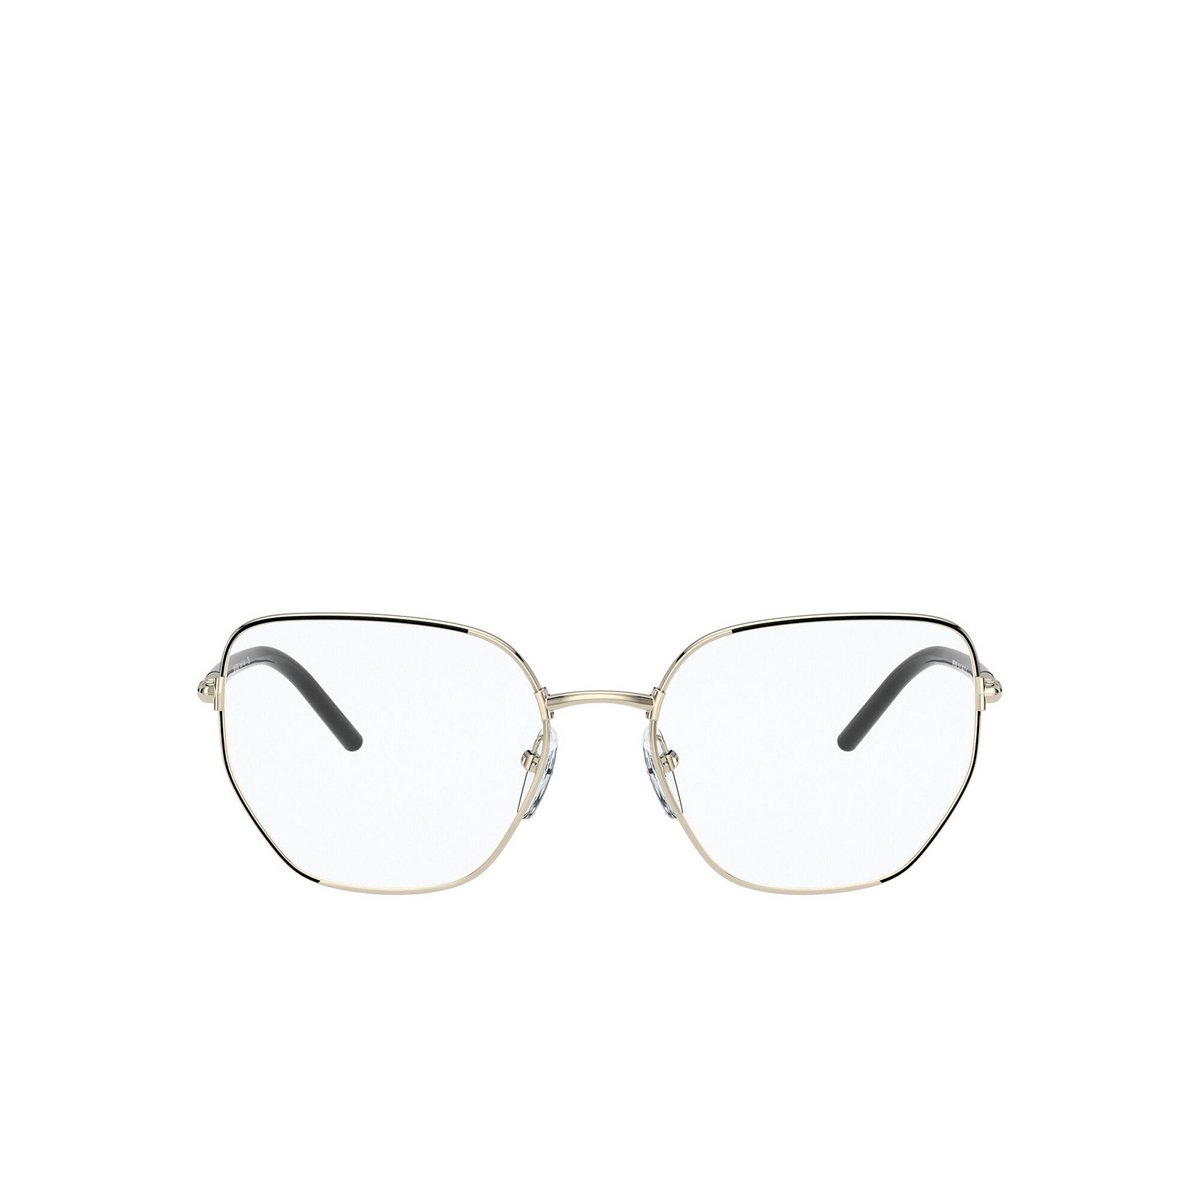 Prada® Irregular Eyeglasses: PR 60WV color AAV1O1 Black / Pale Gold - front view